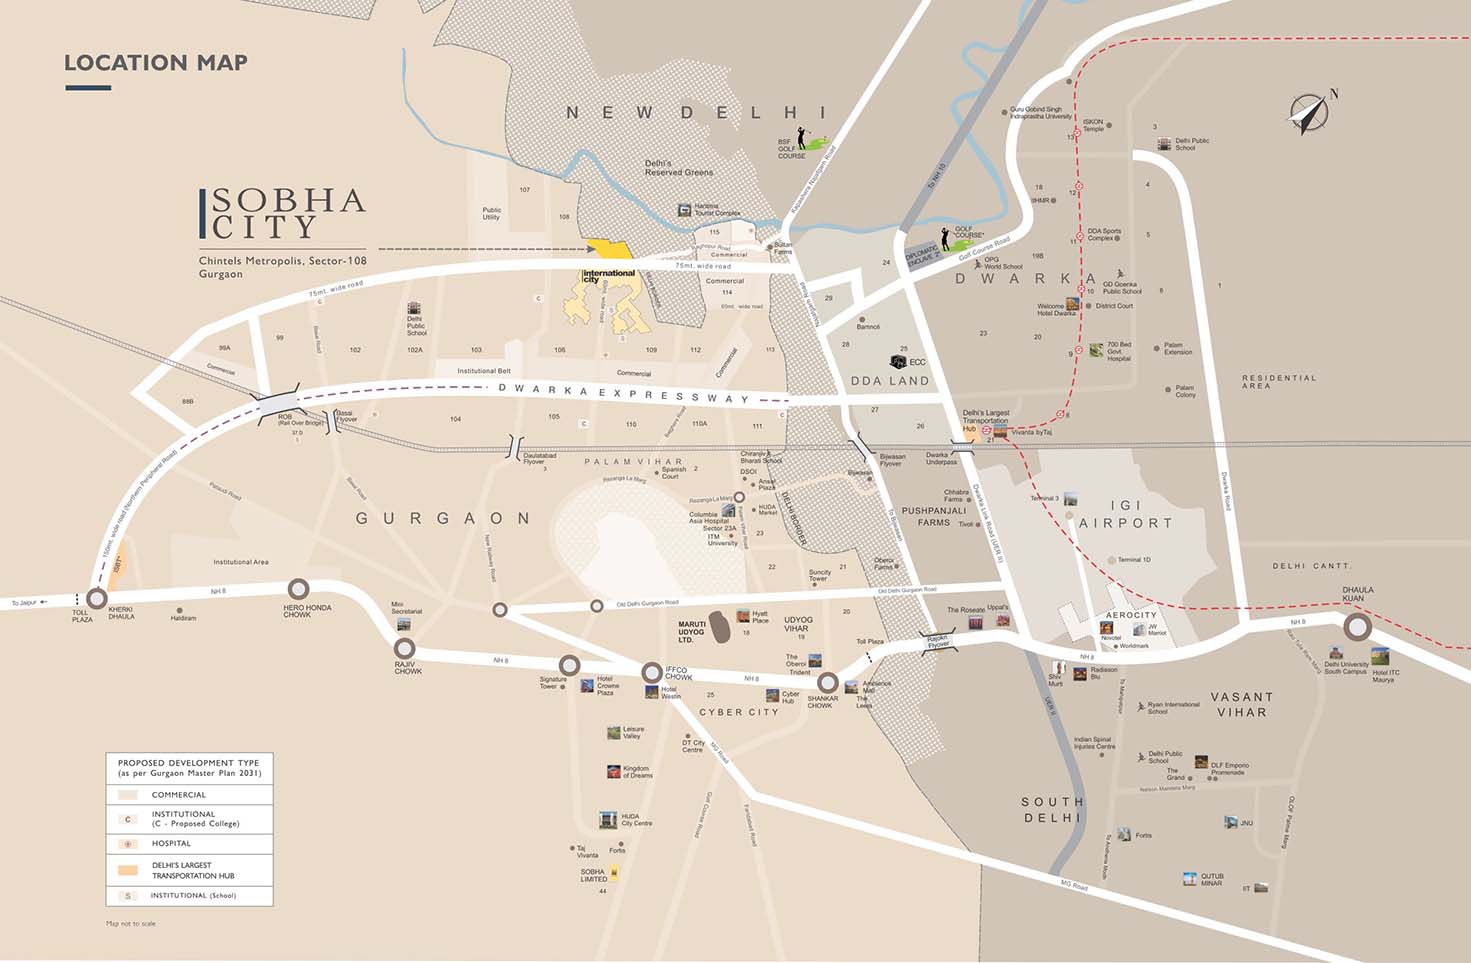 Sobha-city Location Map